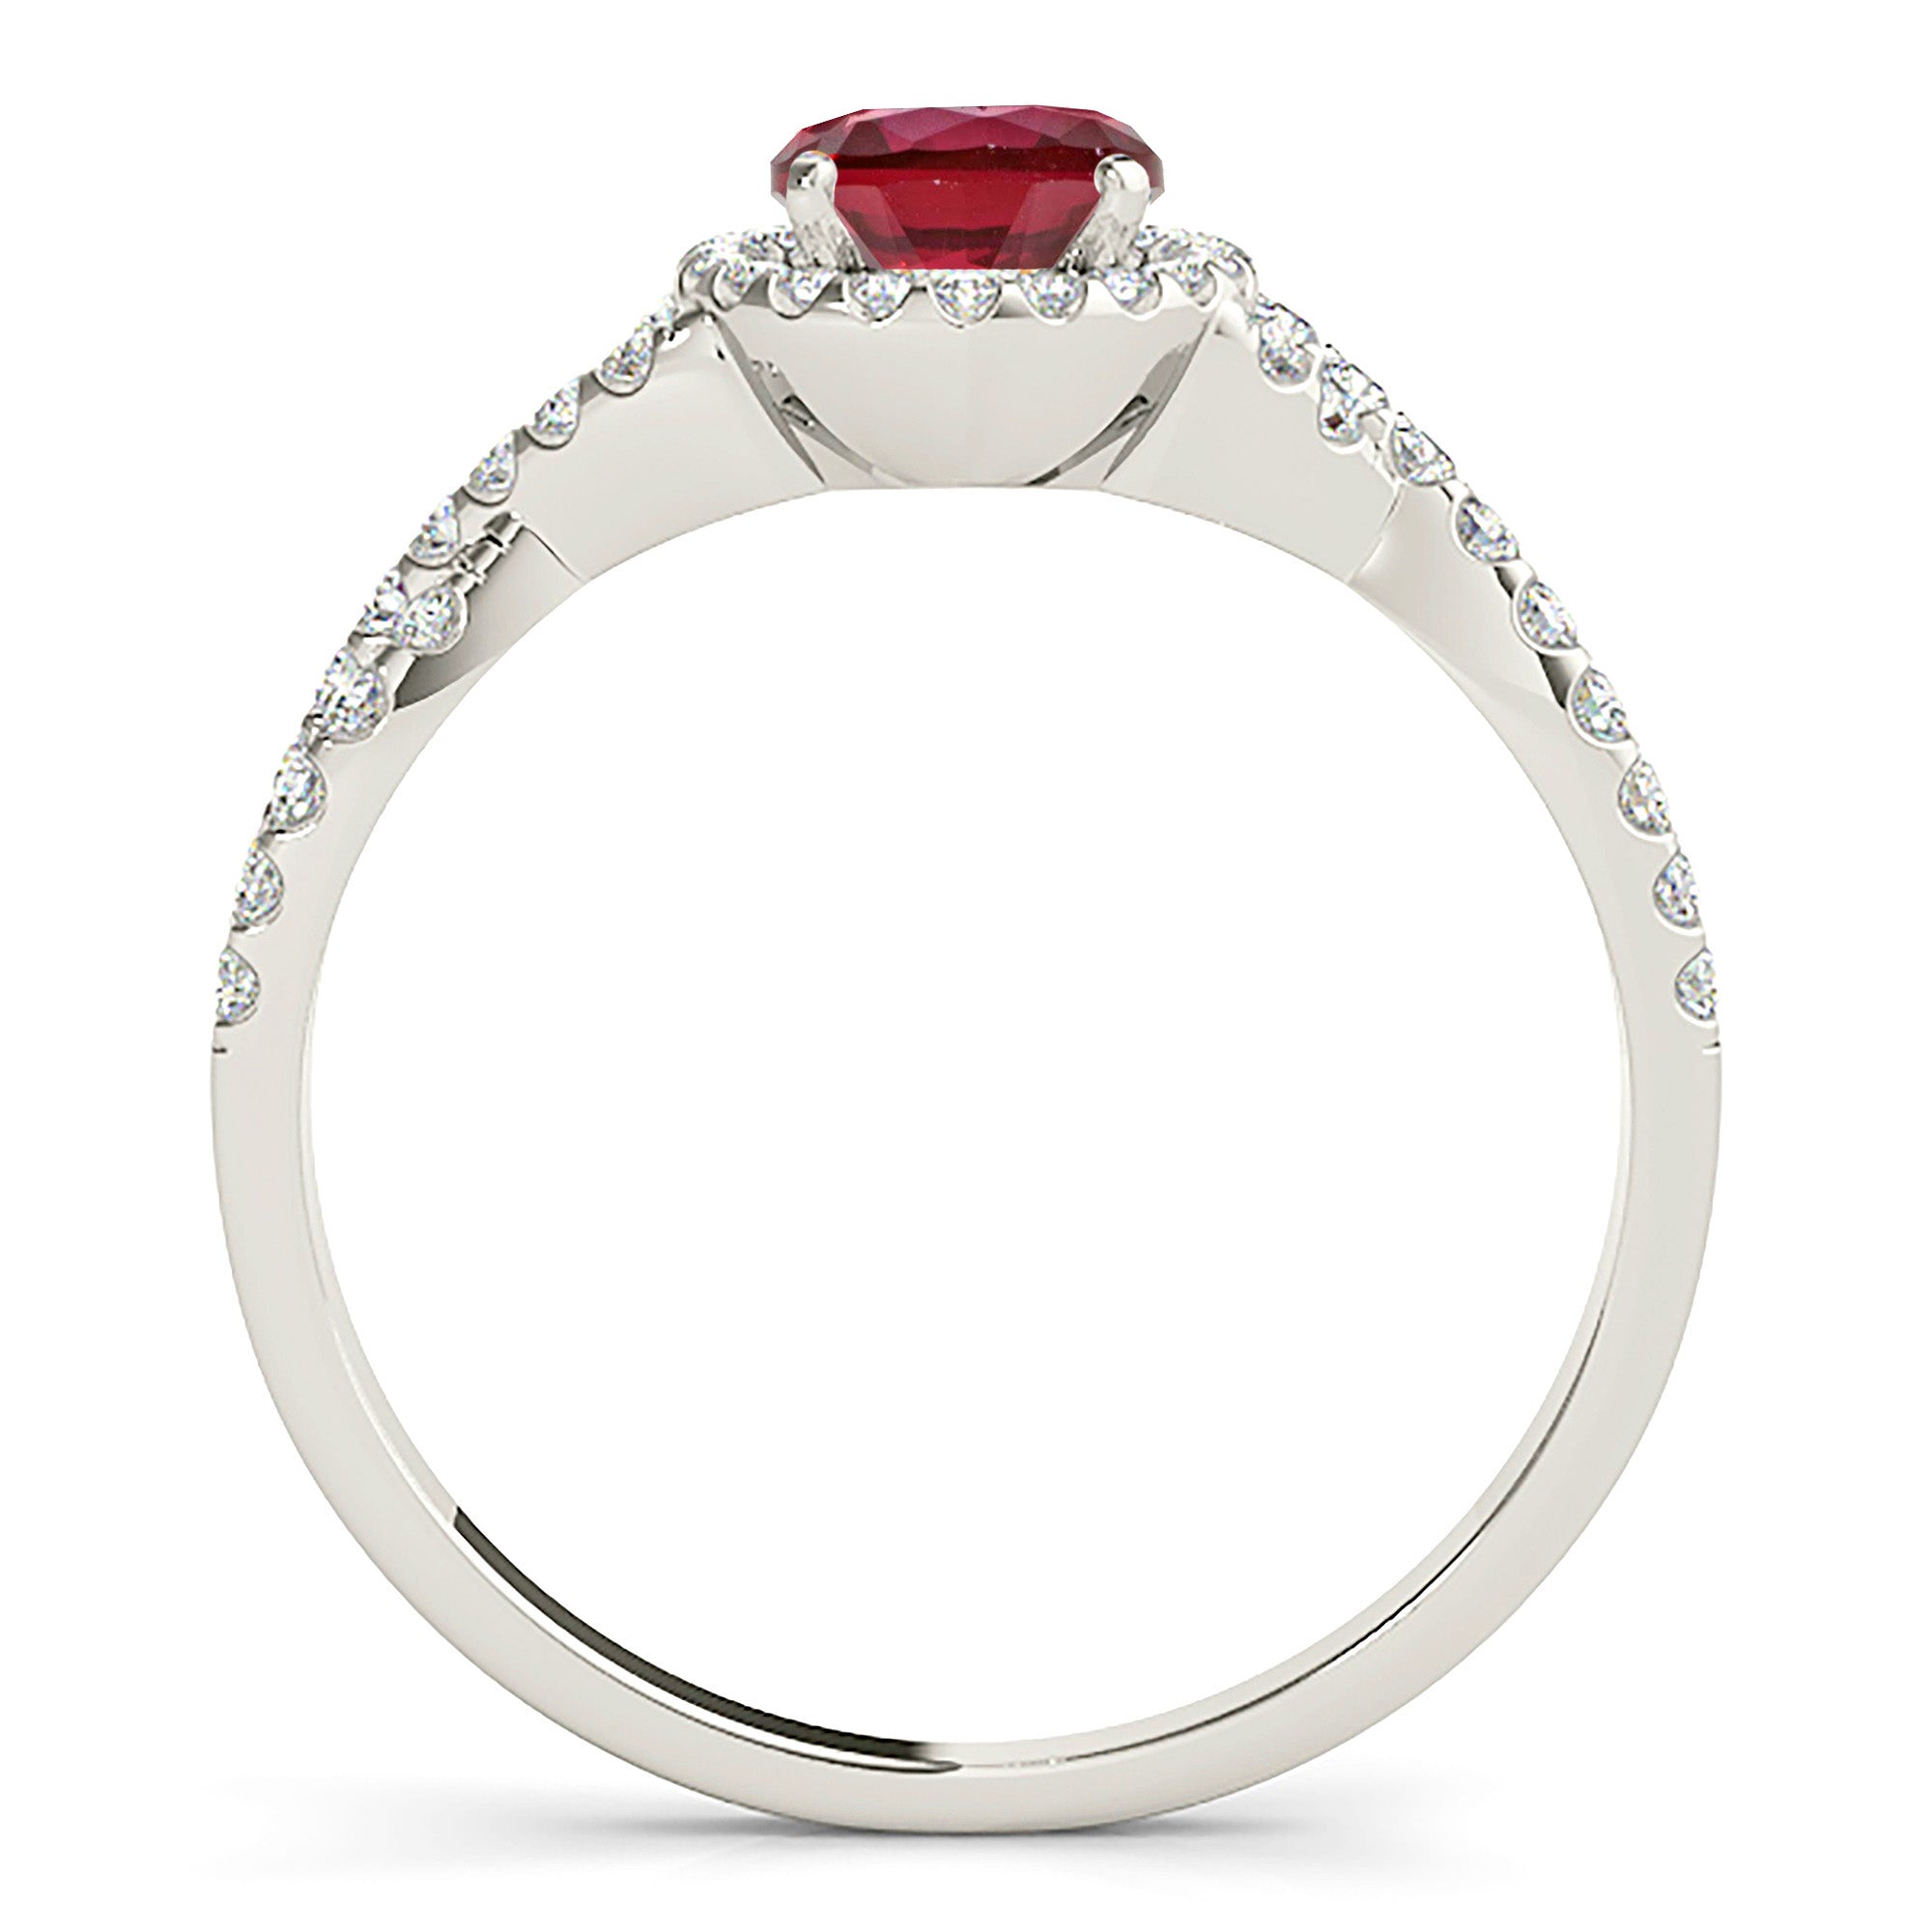 1.35 ct. Genuine Ruby Ring With 0.25 ctw. Diamond Halo And Twist Diamond band-in 14K/18K White, Yellow, Rose Gold and Platinum - Christmas Jewelry Gift -VIRABYANI